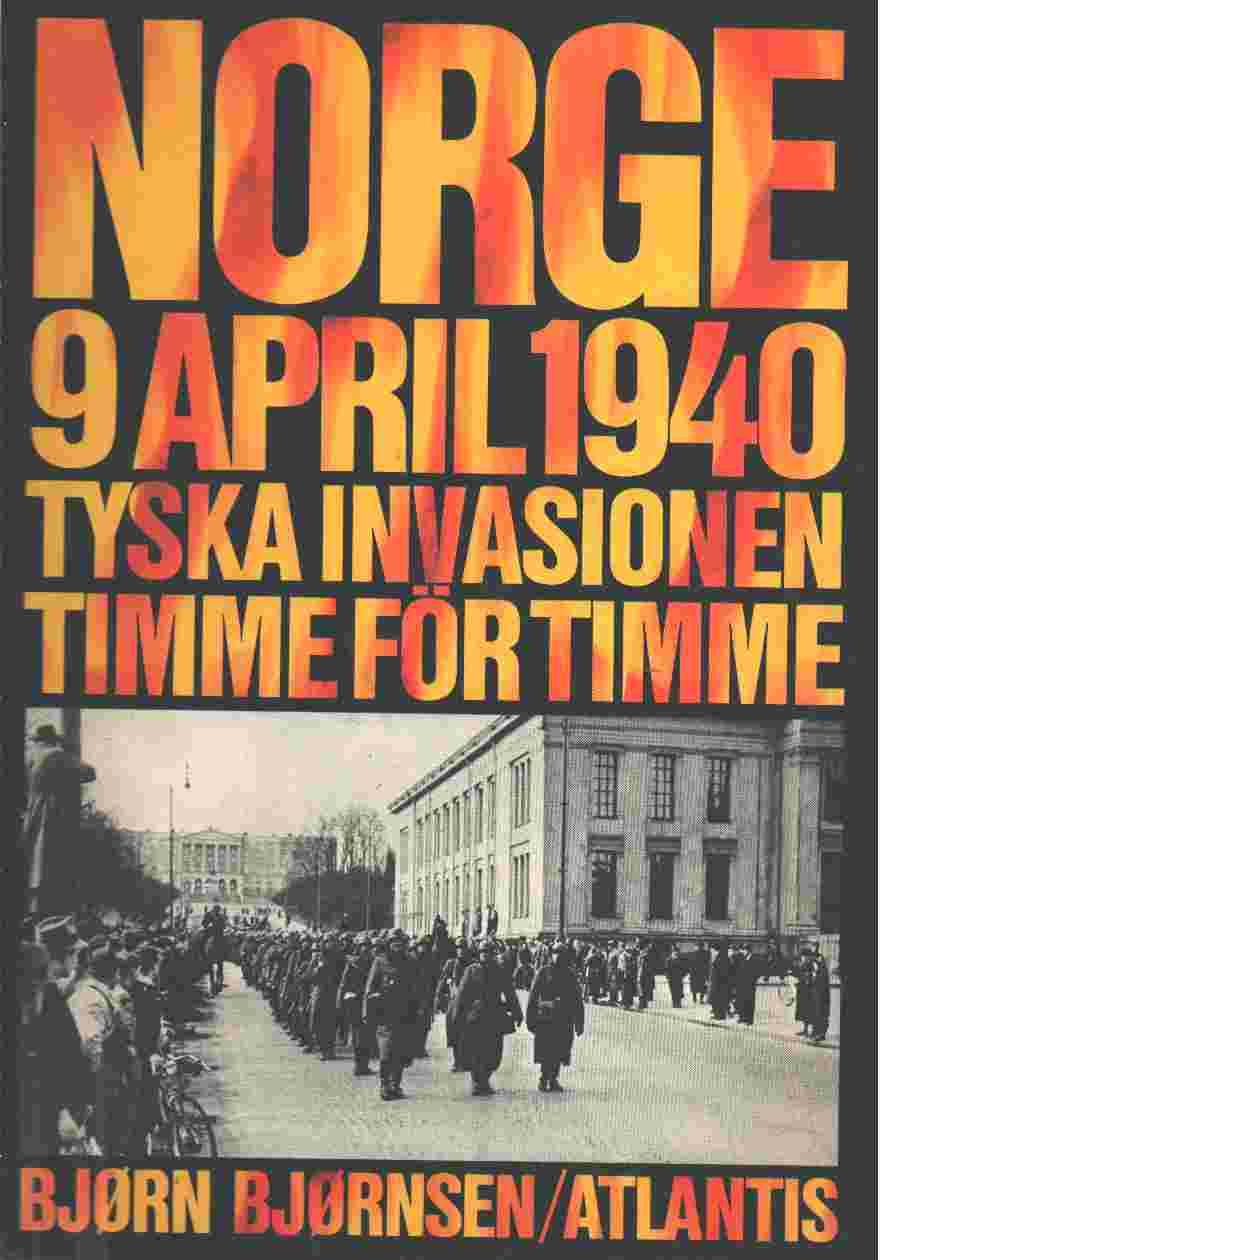 Norge 9 april 1940   tyska invasionen timme för timme - Bjørnsen, Bjørn